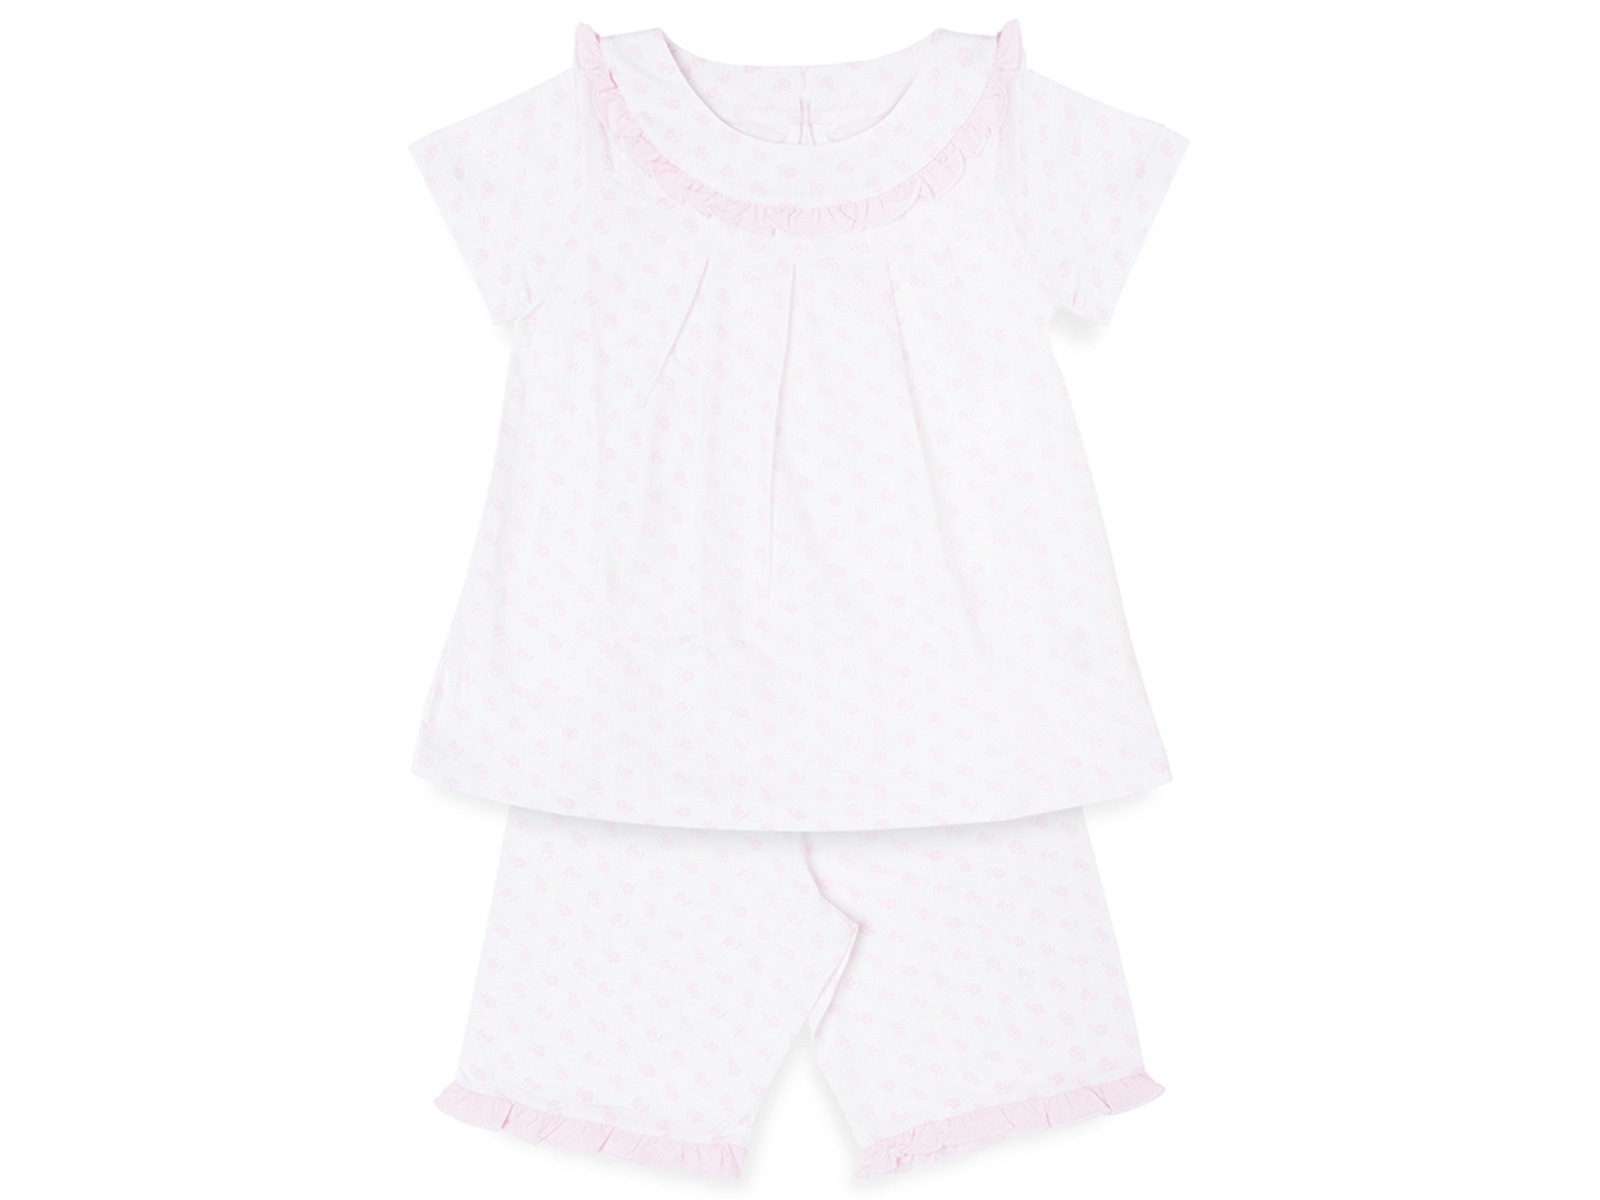 Siebaneck, i pigiami artigianali: - bambina - mod.37 vol bianco/rosa